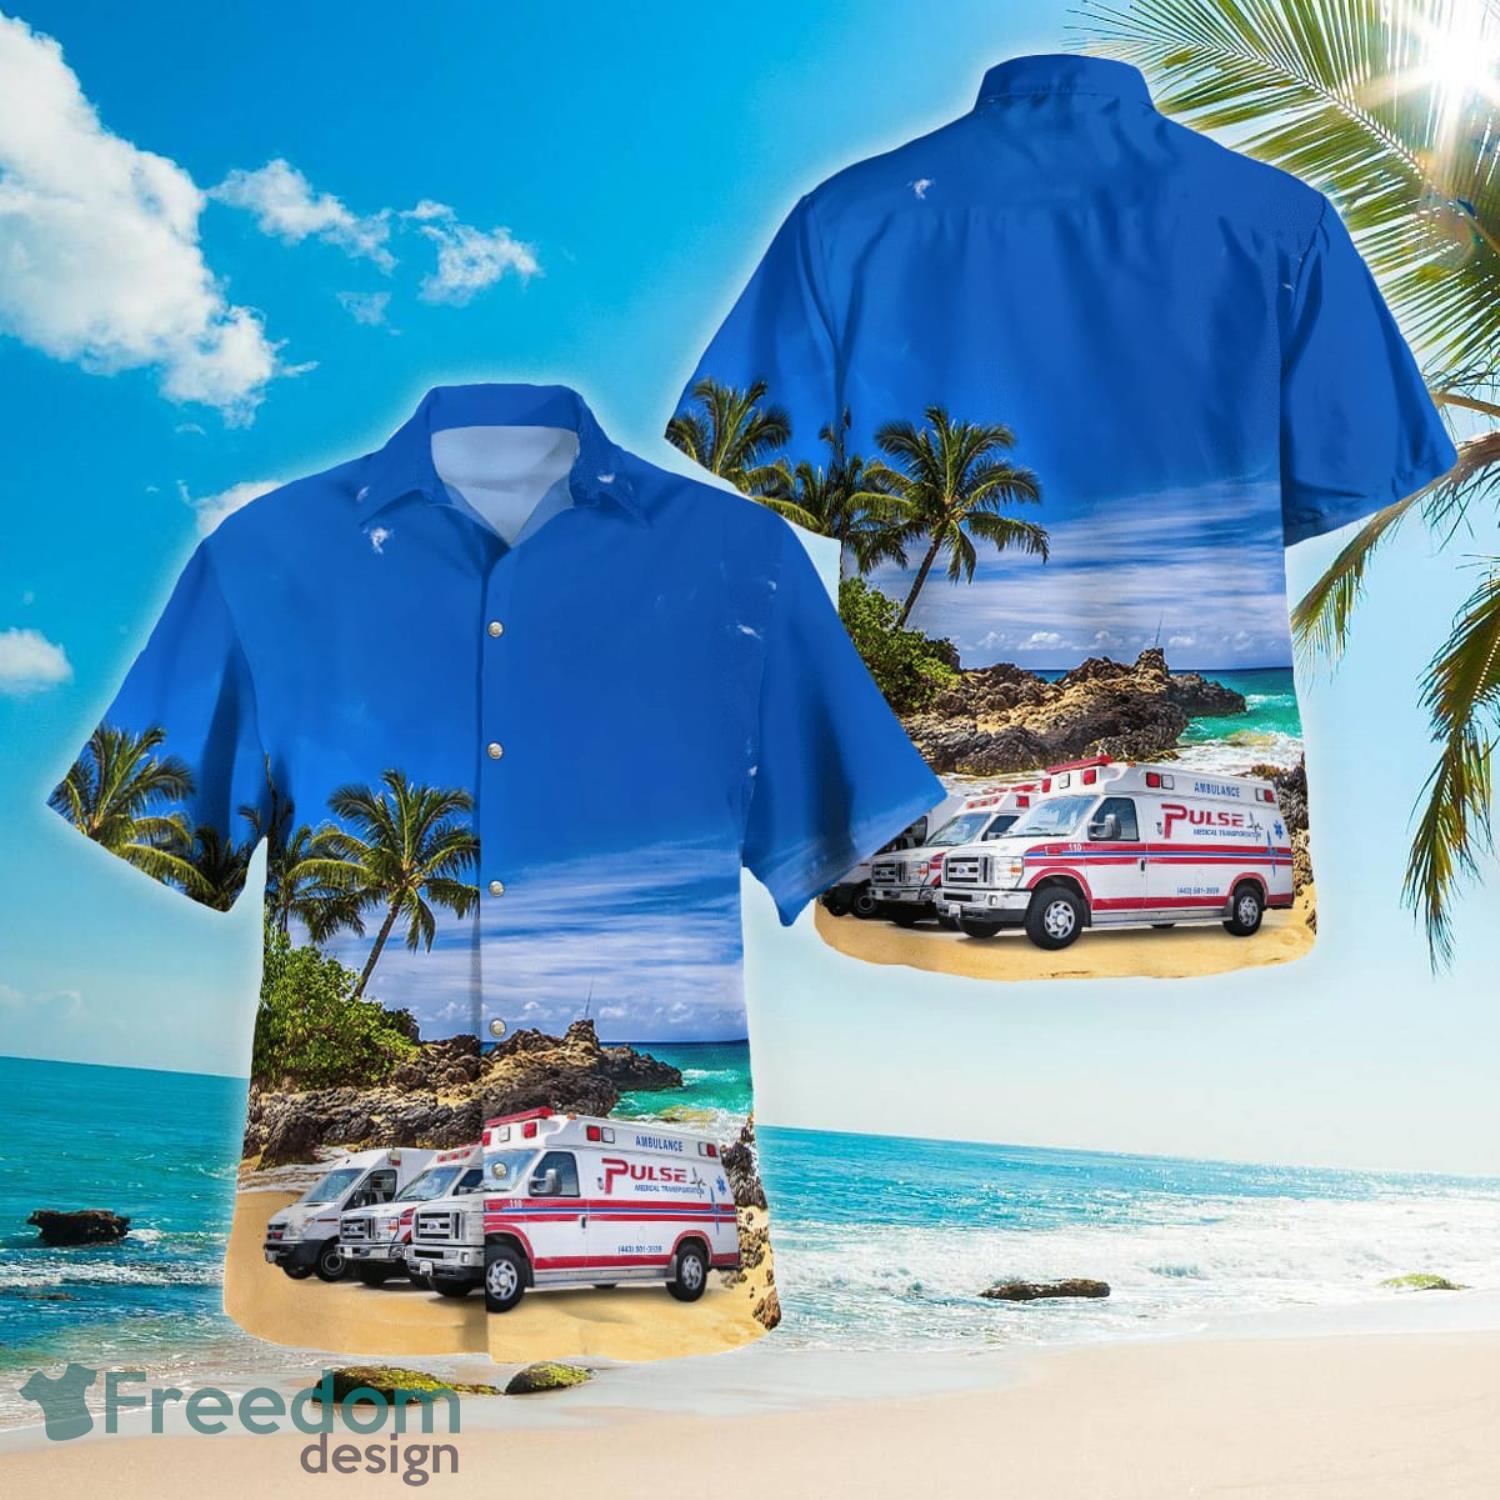 Pan American Clipper 314 Hawaiian Shirt Summer Gift For Men And Women